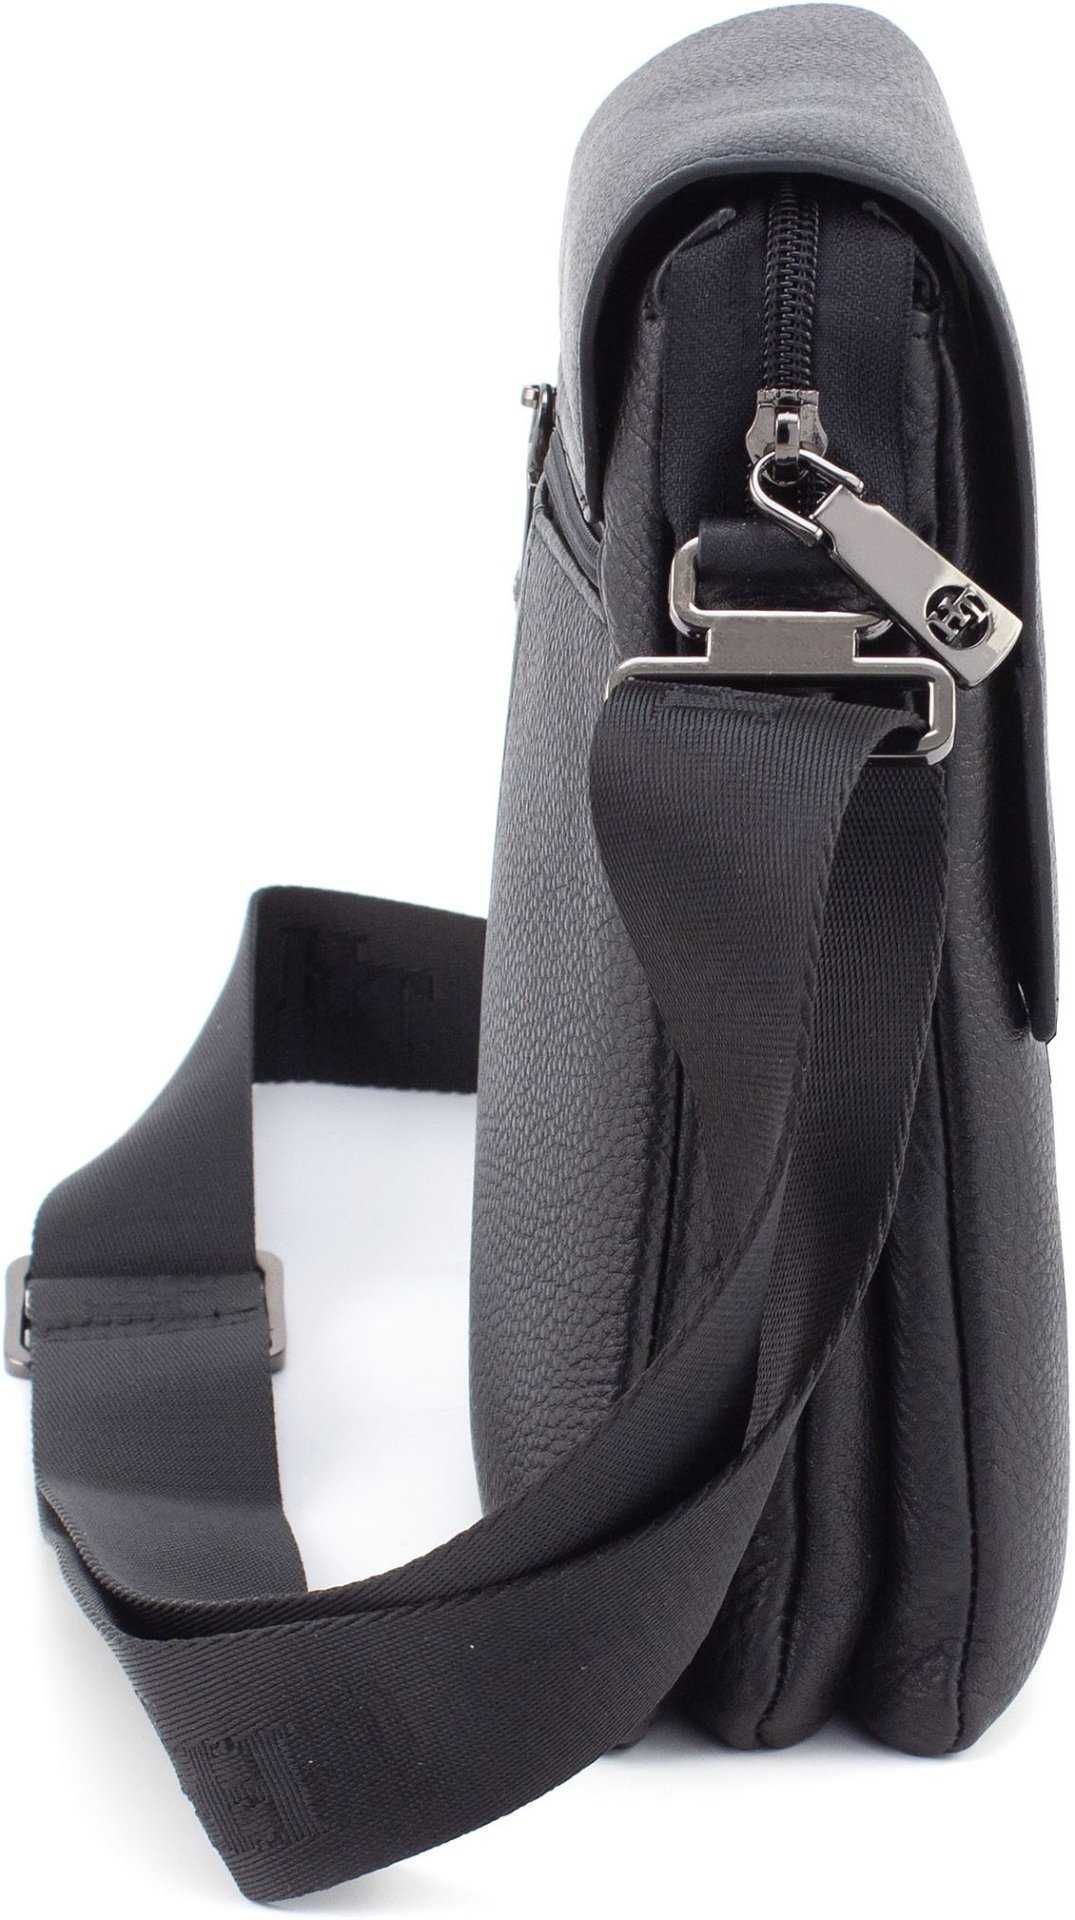 Стильная мужская кожаная сумка H.T.Leather ! Идеальный размер 20*24см.